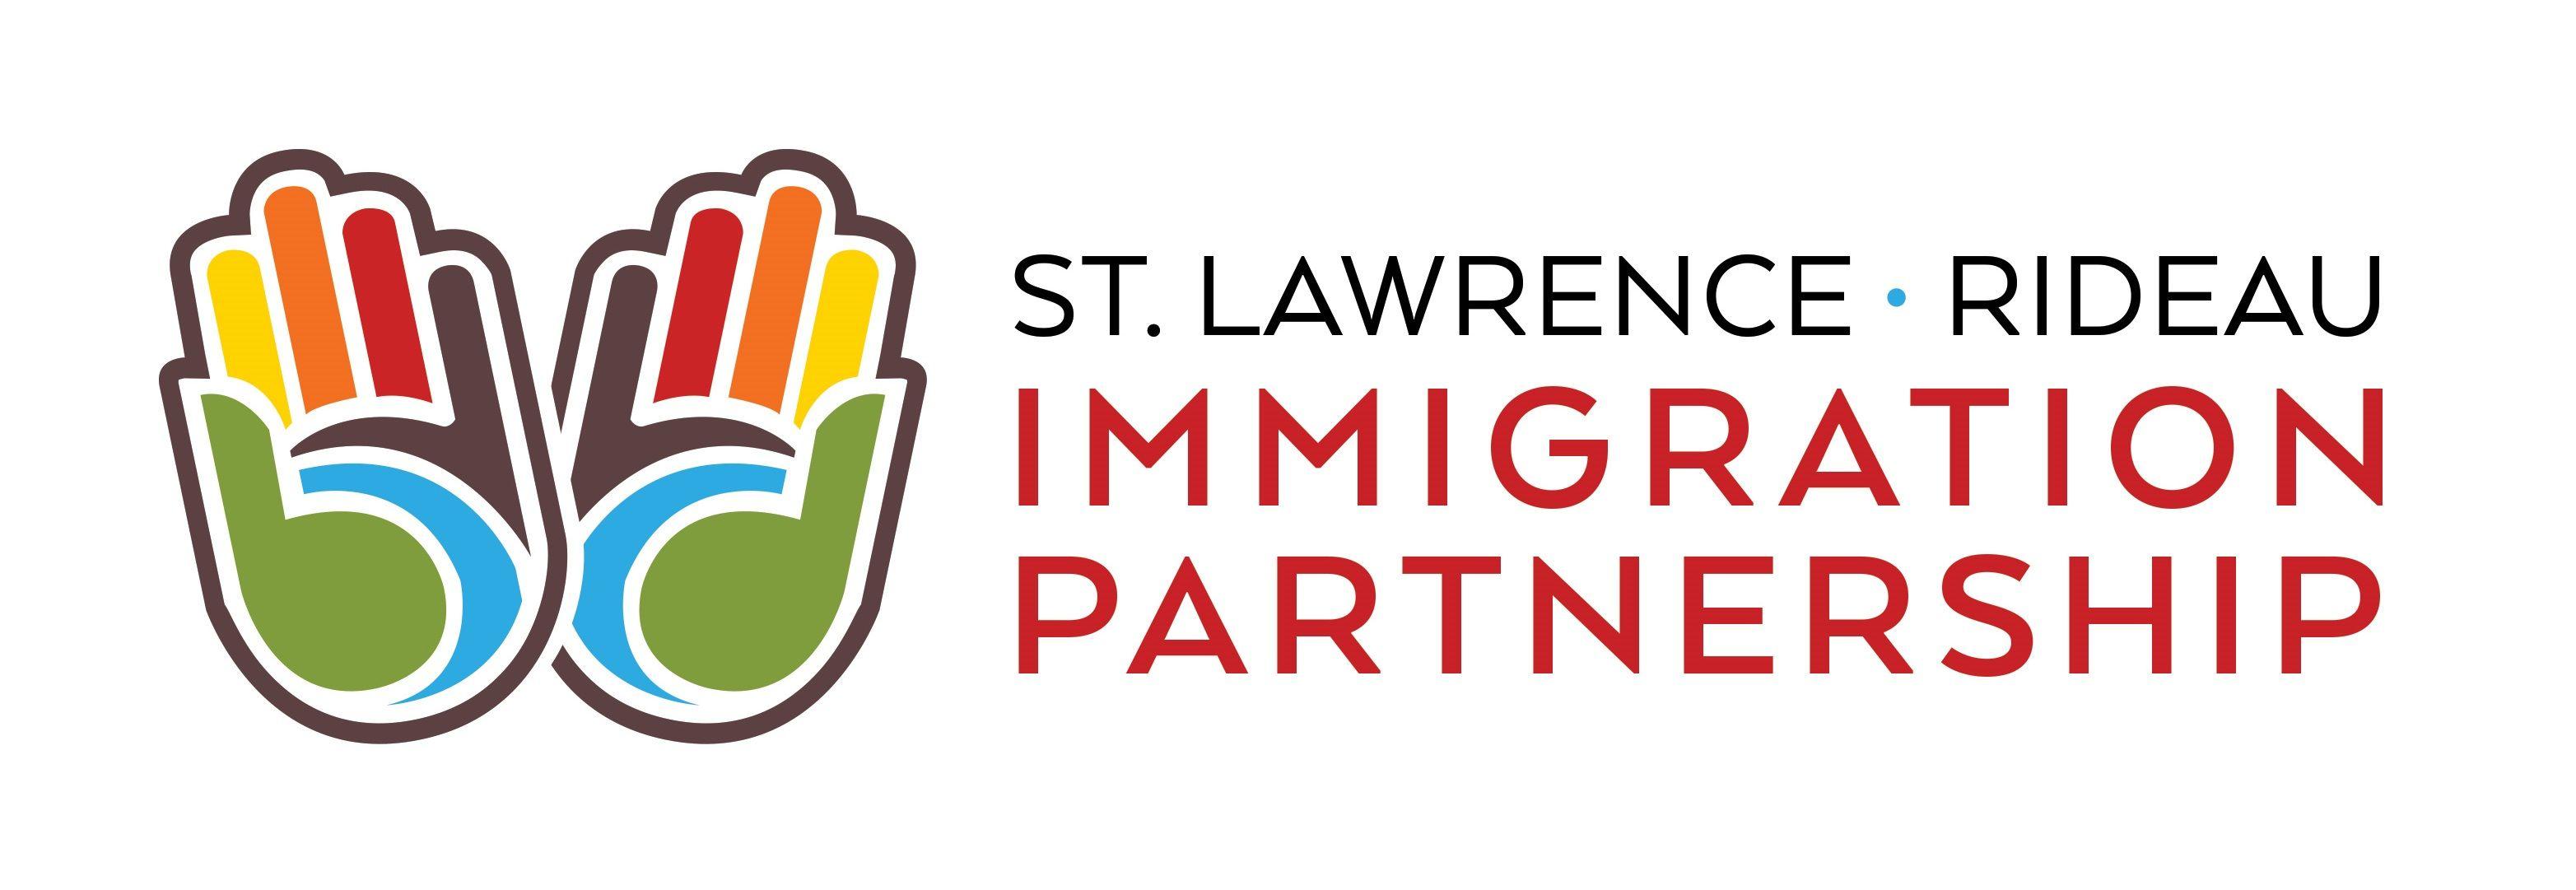 Immigration Logo - immigration logo